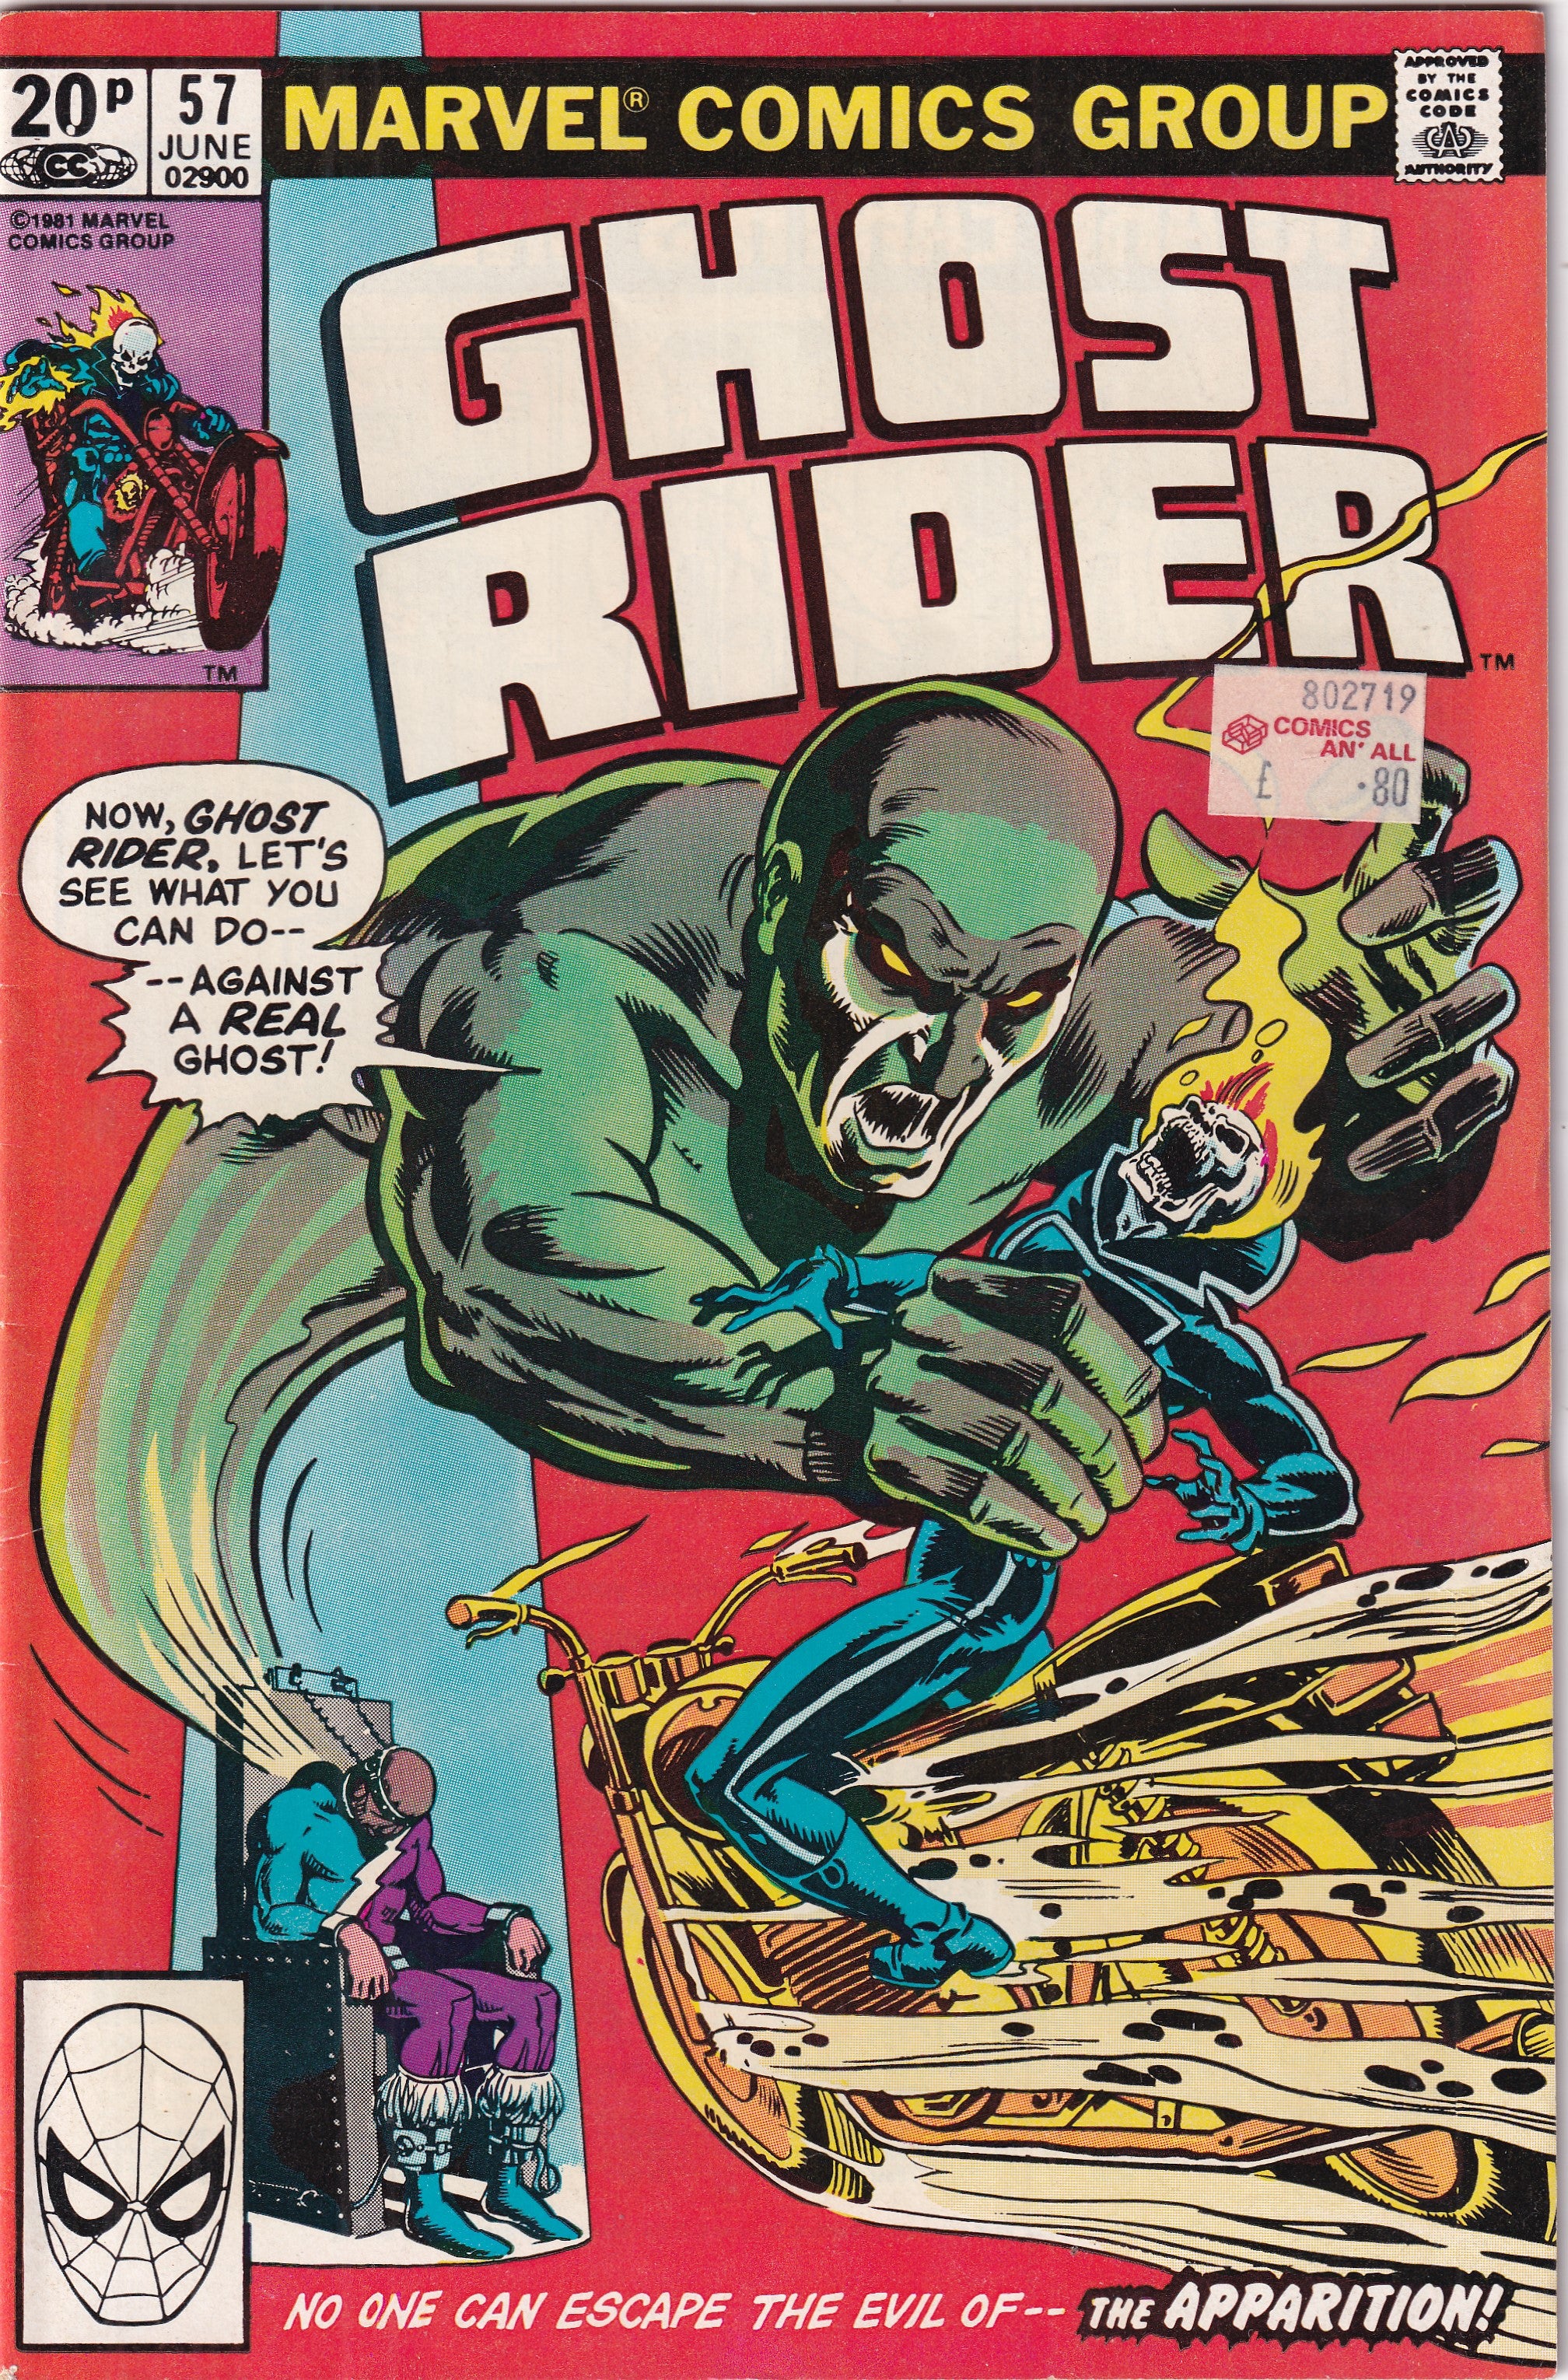 GHOST RIDER #57 - Slab City Comics 